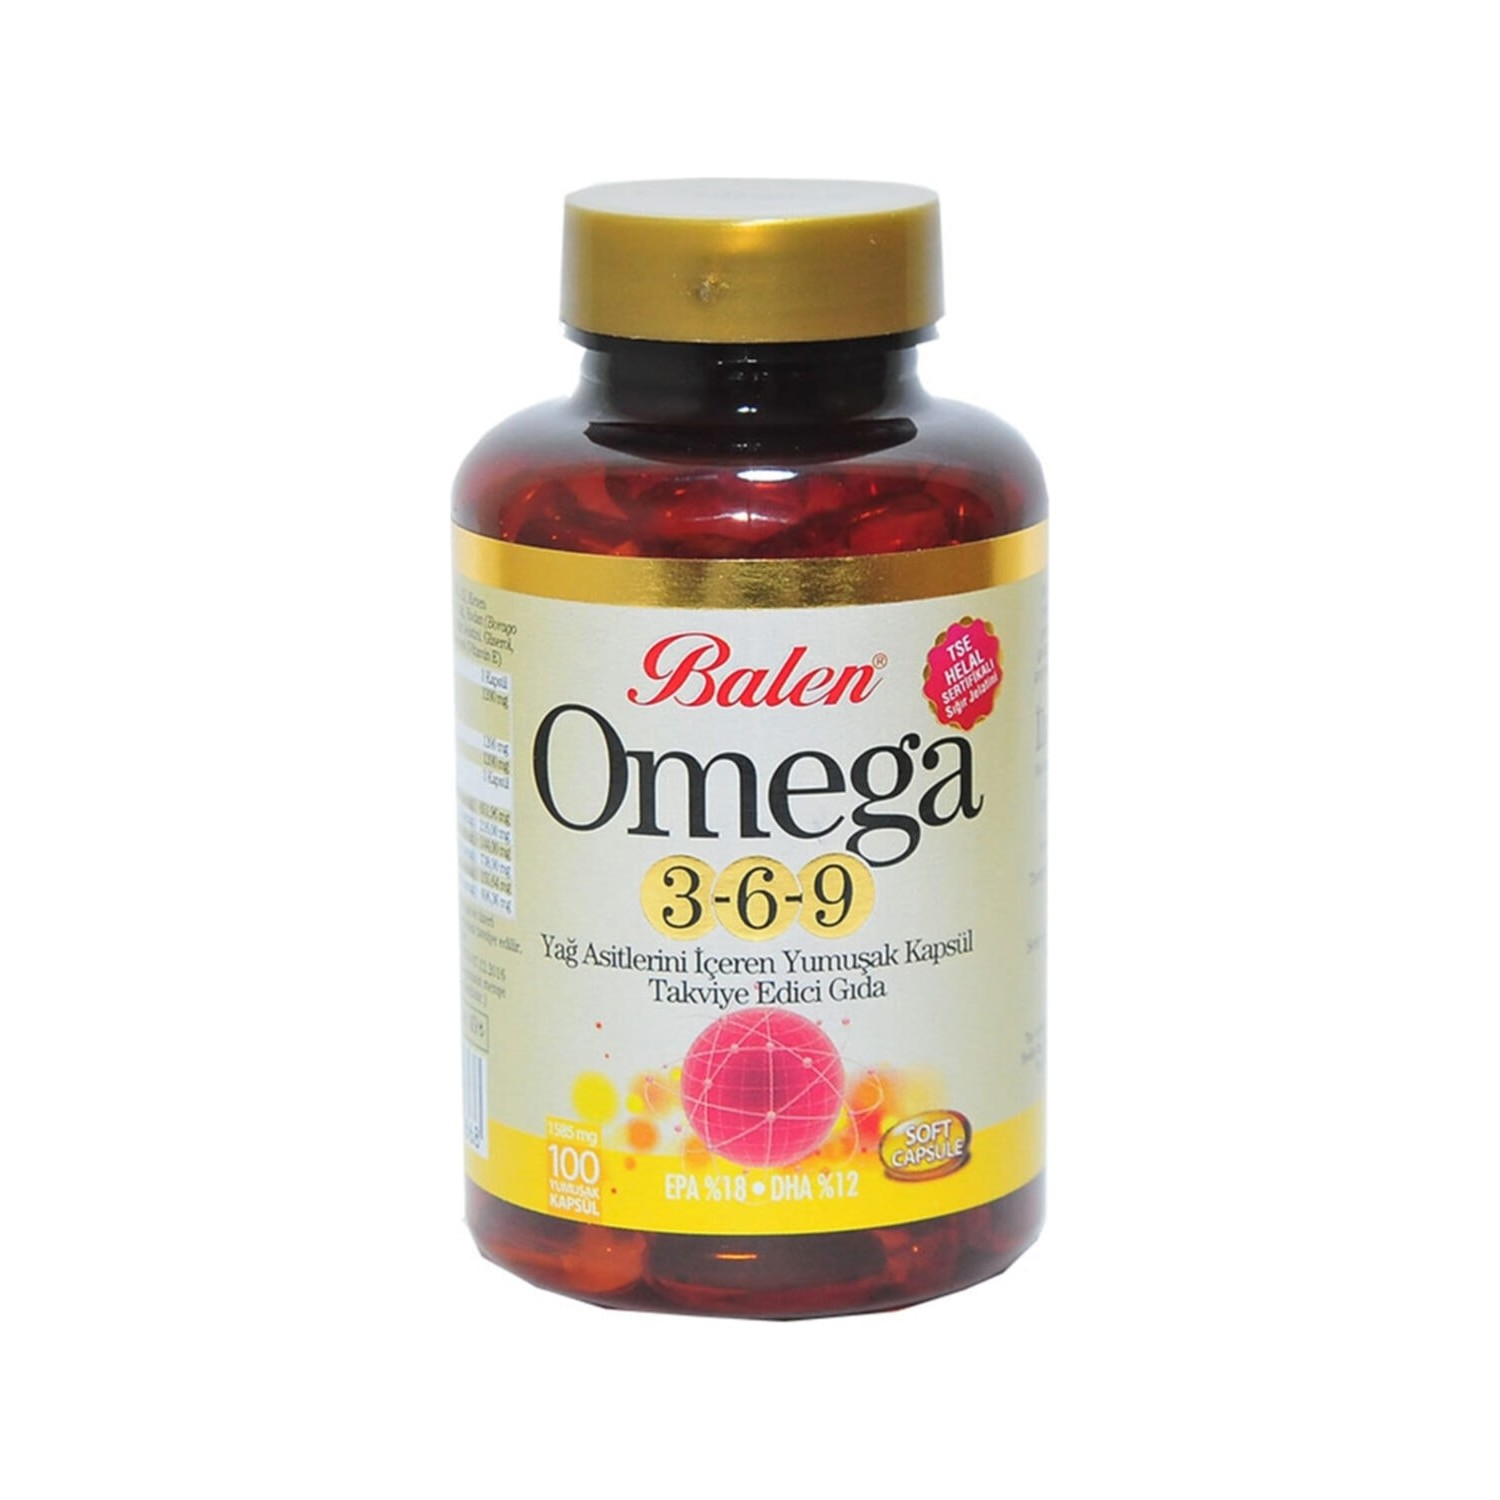 Рыбий жир Balen Omega 3-6-9, 100 капсул, 1585 мг рыбий жир balen omega 3 6 9 60 капсул 1585 мг